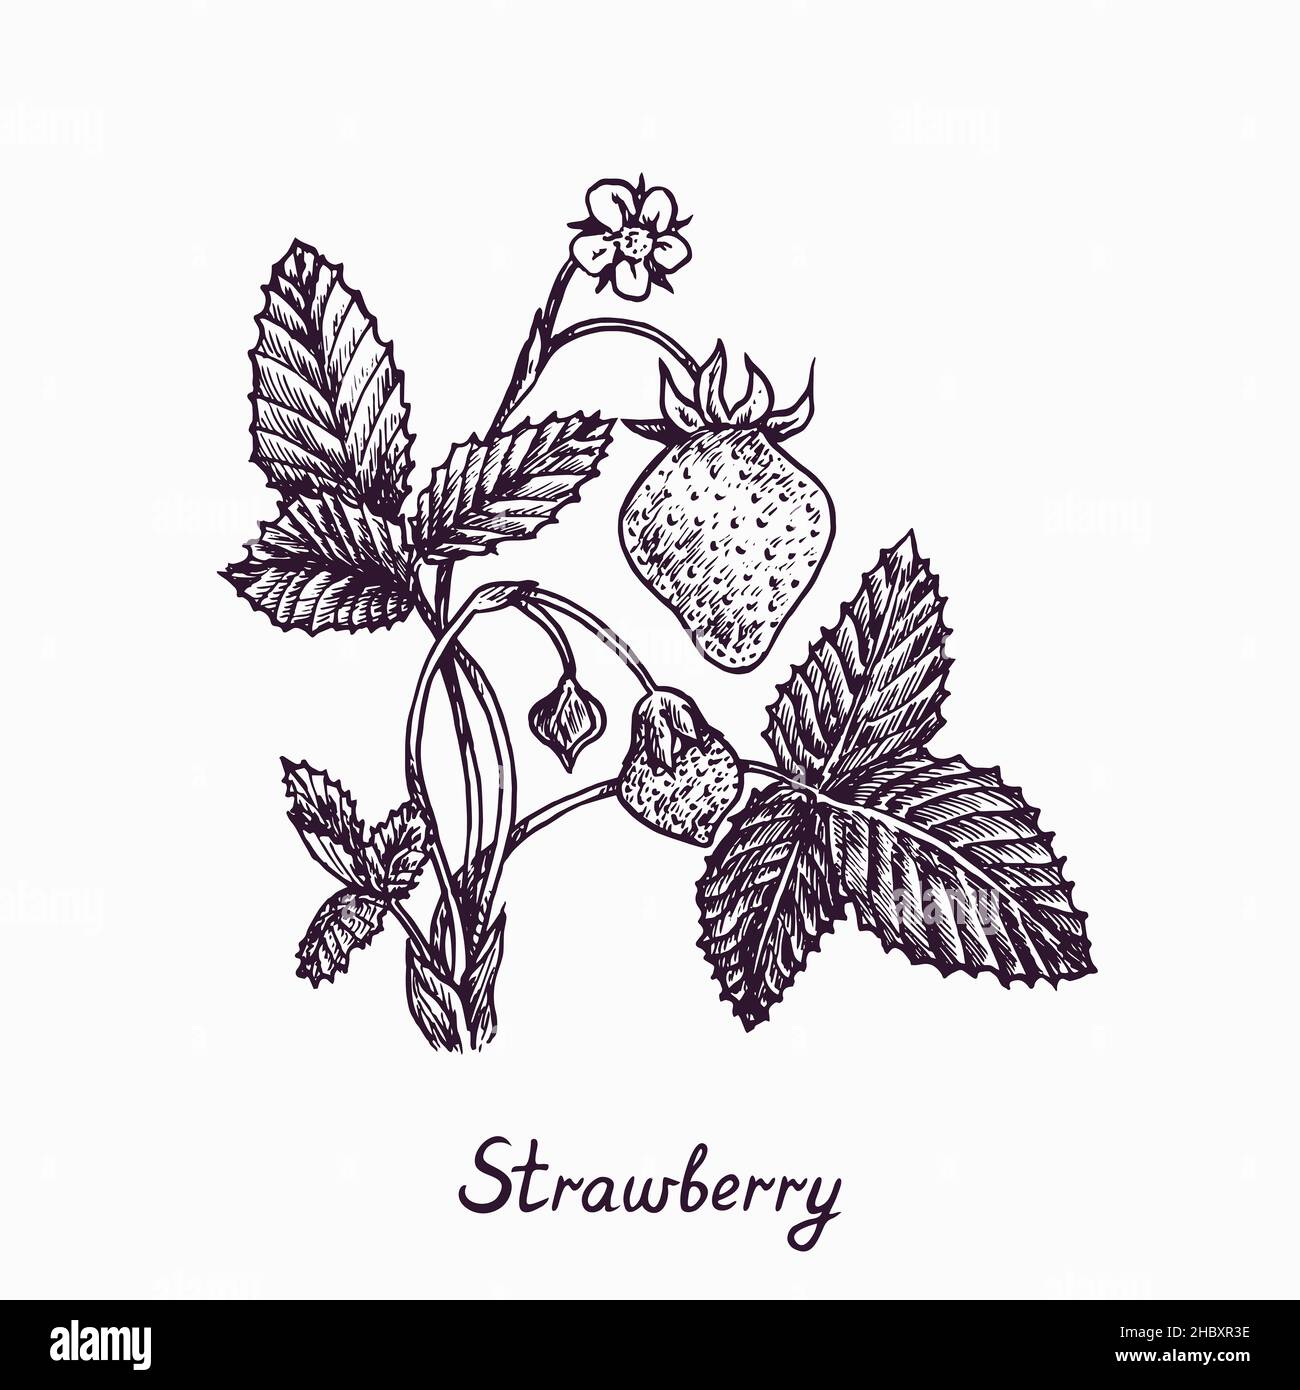 Strawberry plant botanical vintage illustration Stock Vector | Adobe Stock